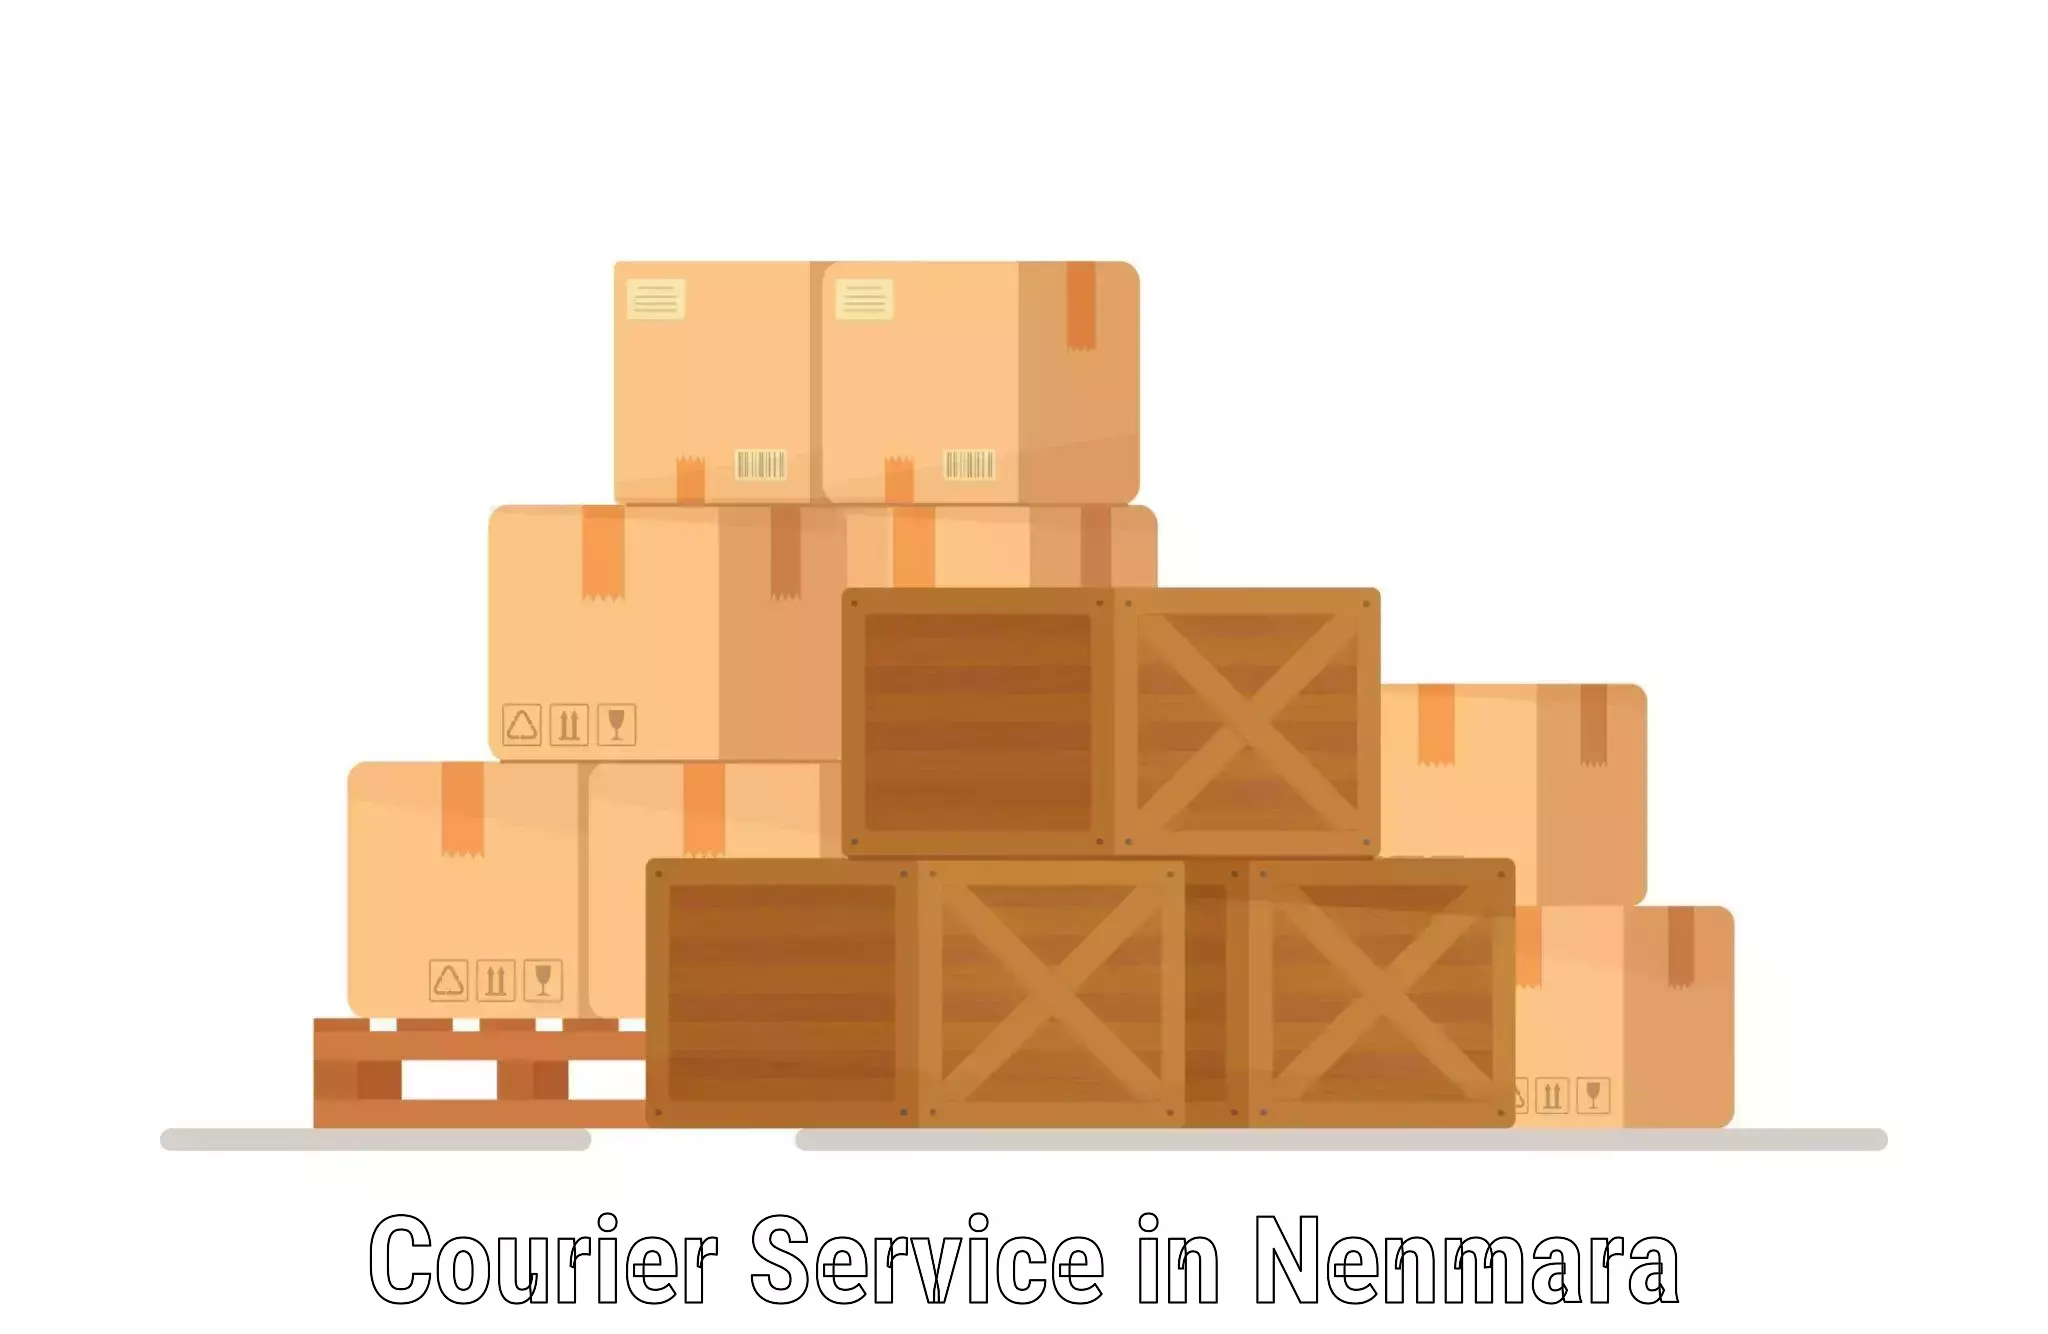 Courier service innovation in Nenmara